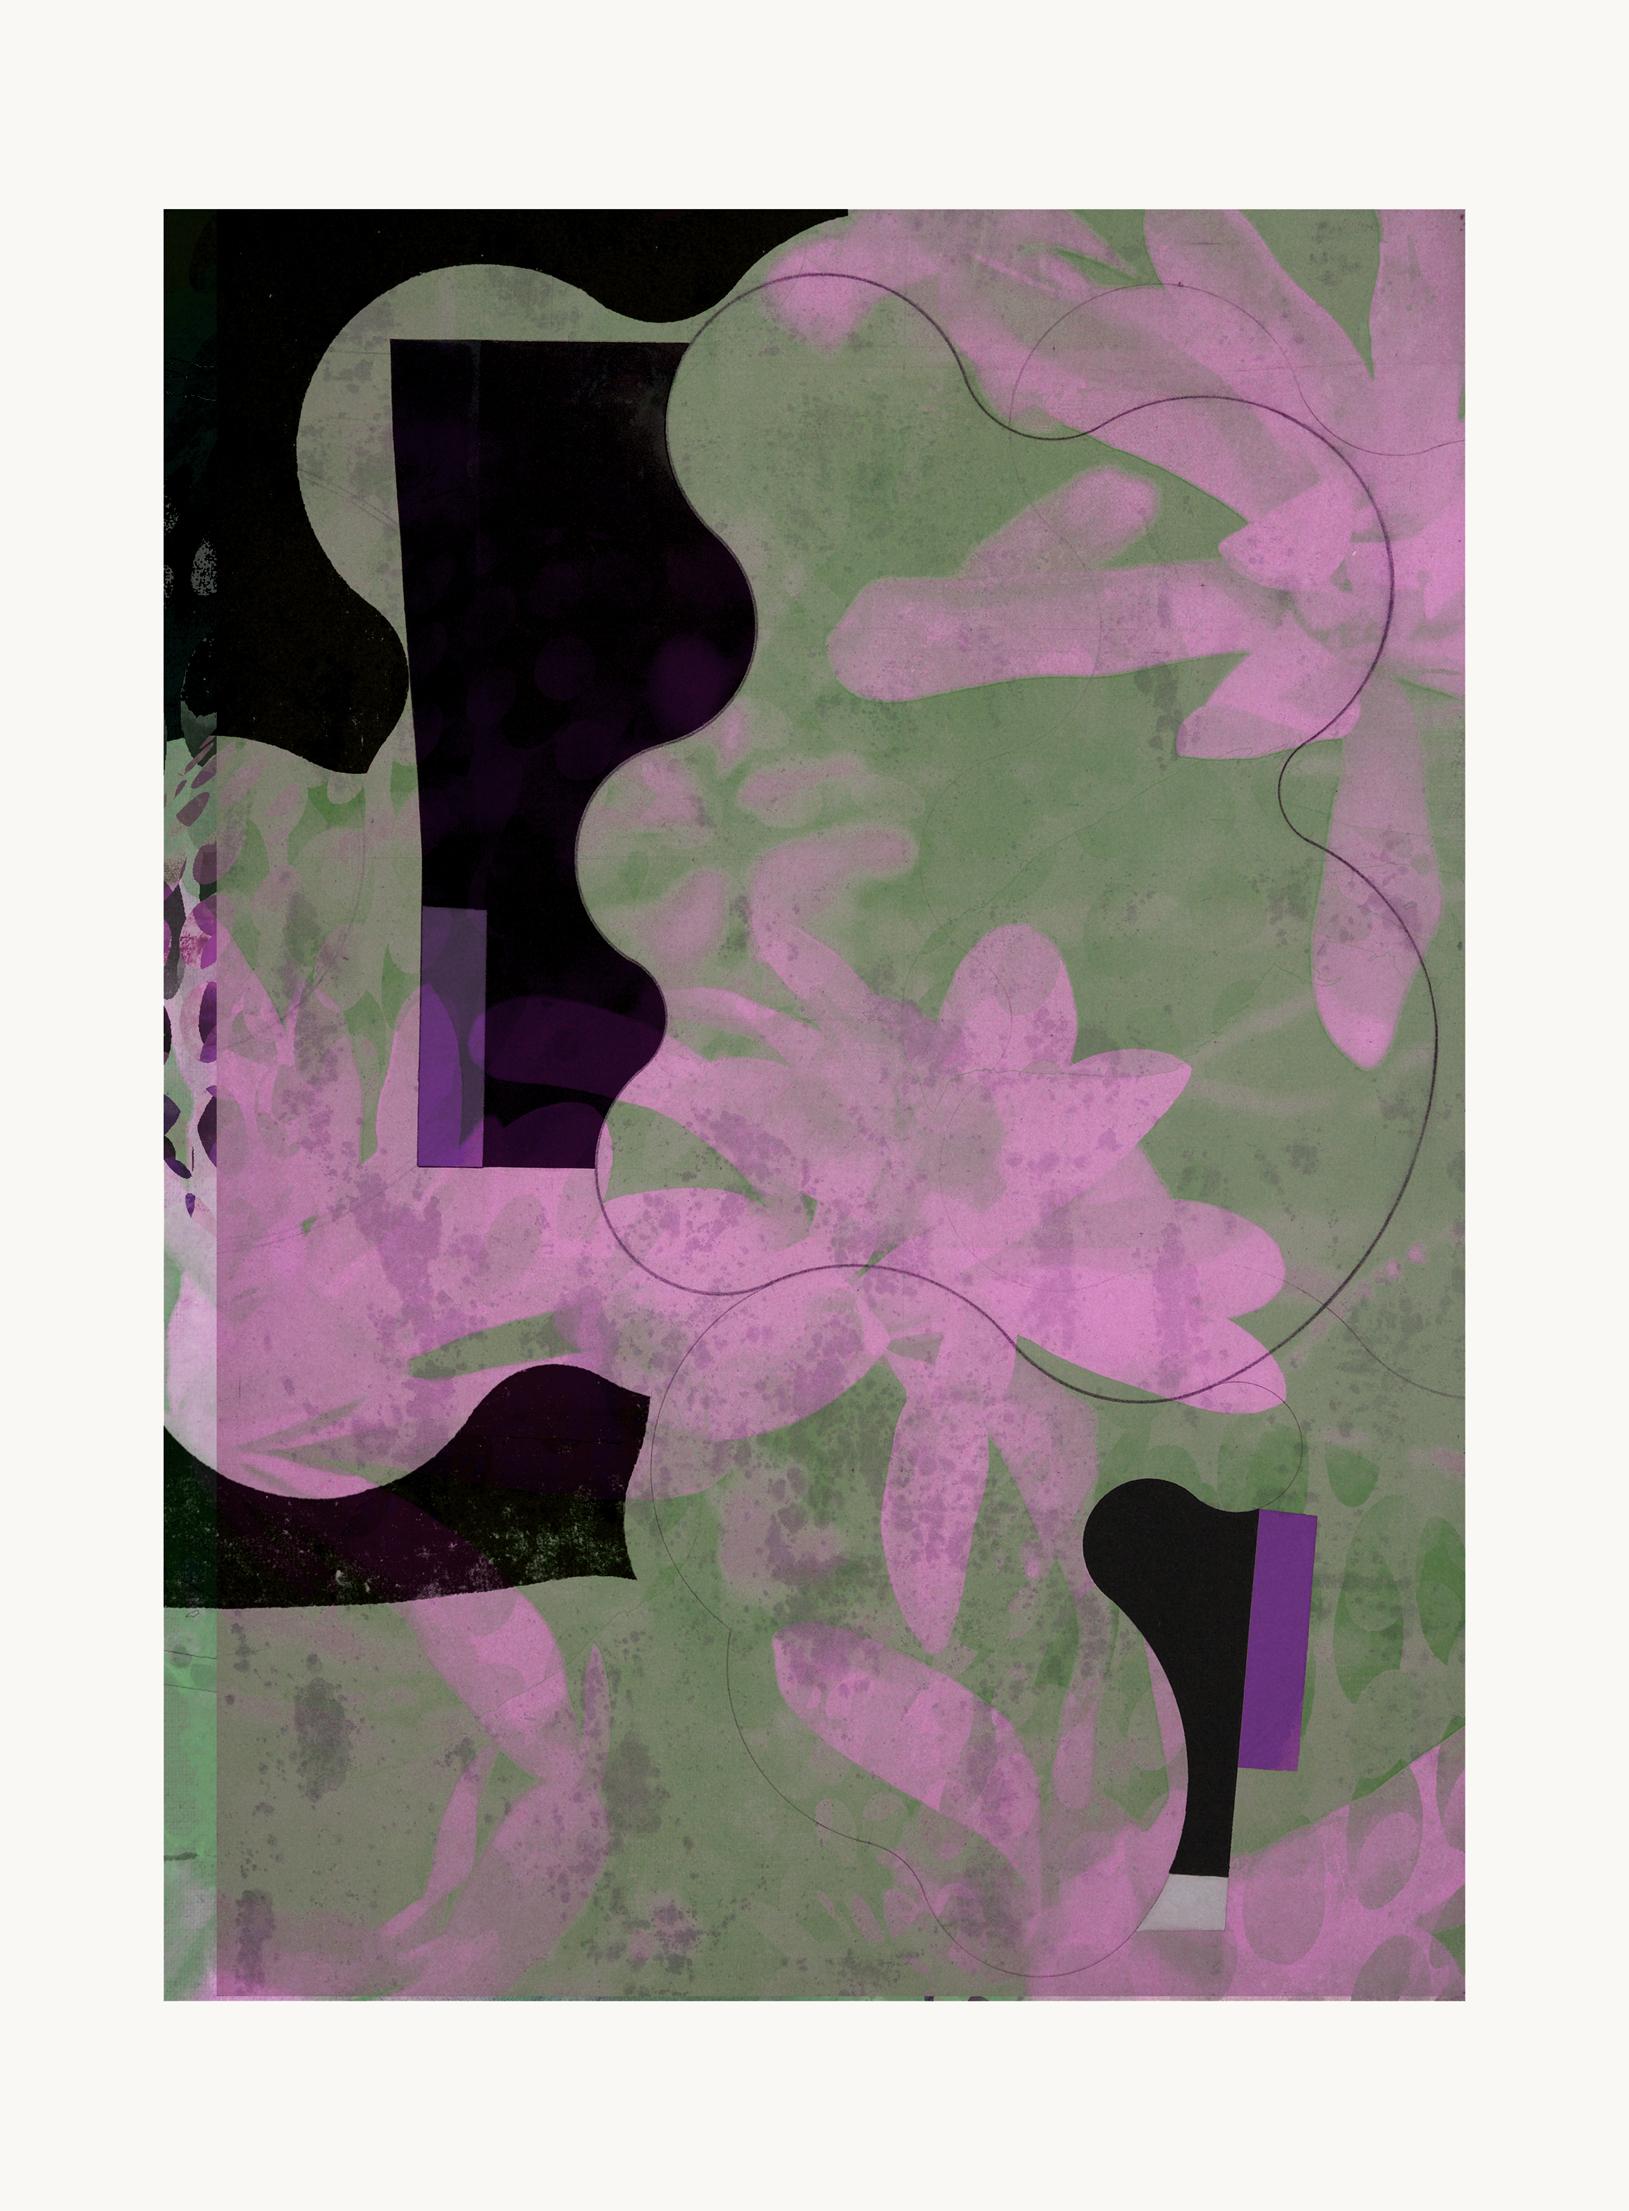 Francisco Nicolás Abstract Print – Blumen9 – Zeitgenössisch, Abstrakt, Gestuell, Street Art, Pop Art, Moderne, Geometrisch